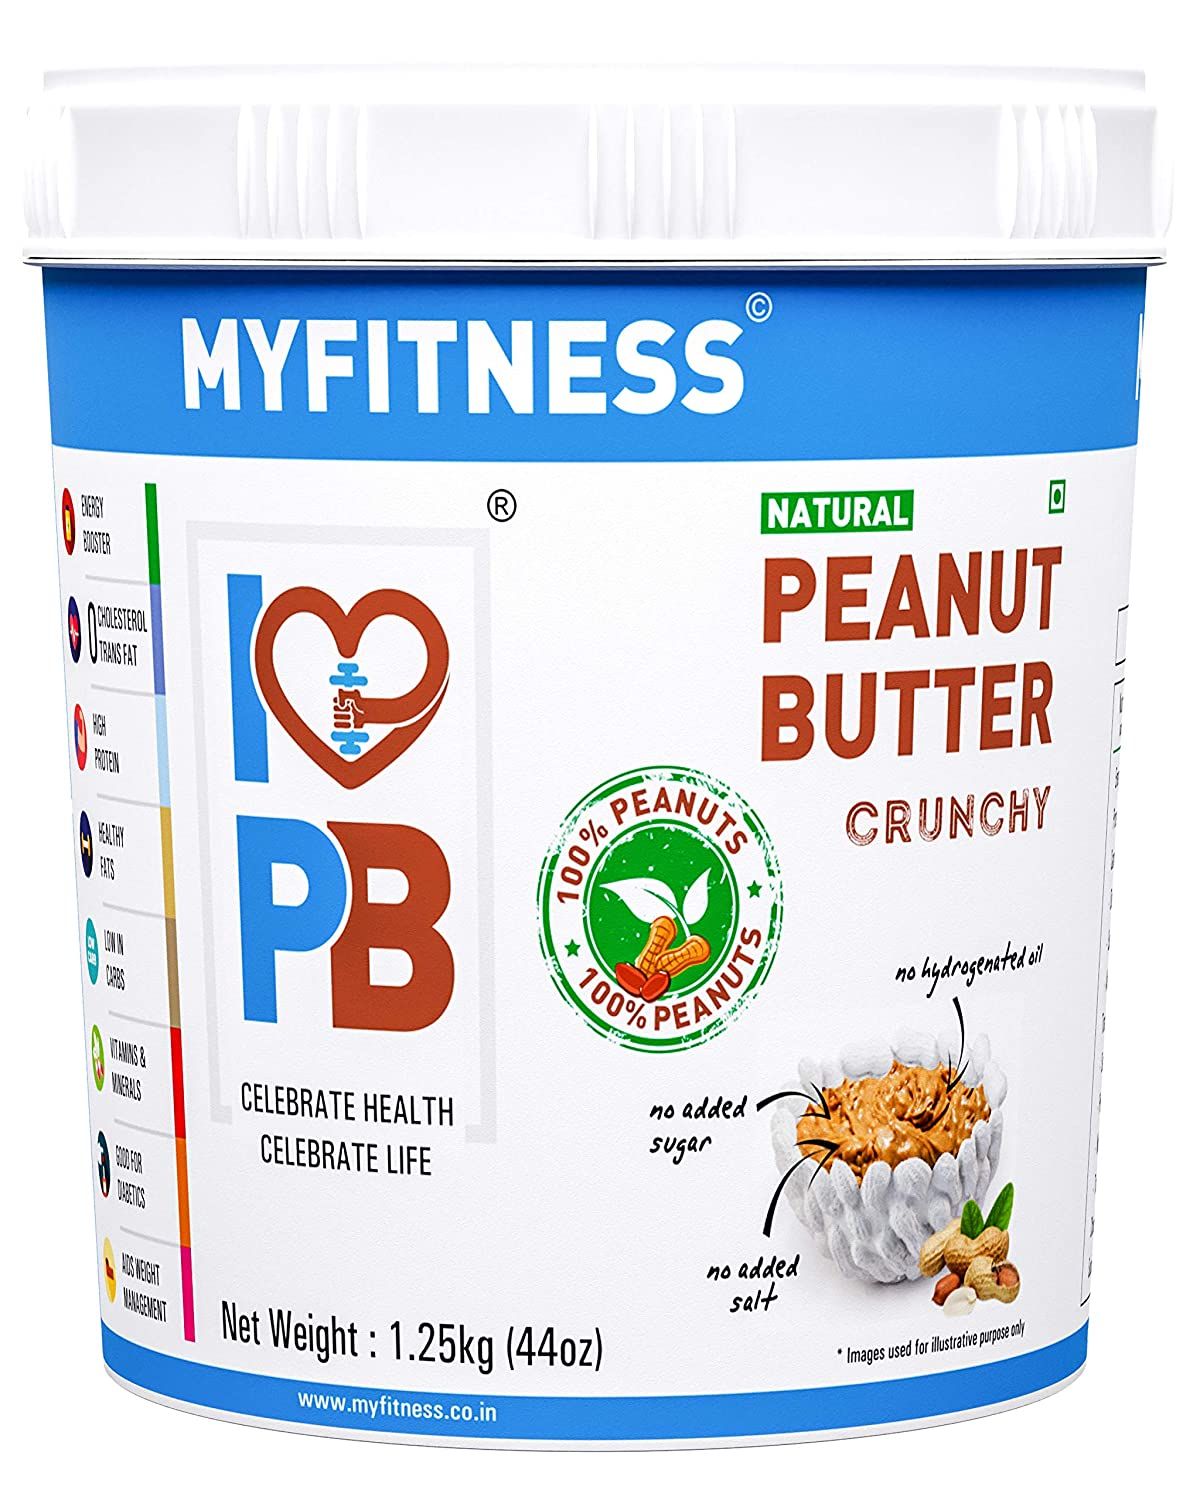 Myfitness Natural Peanut Butter Crunchy Image